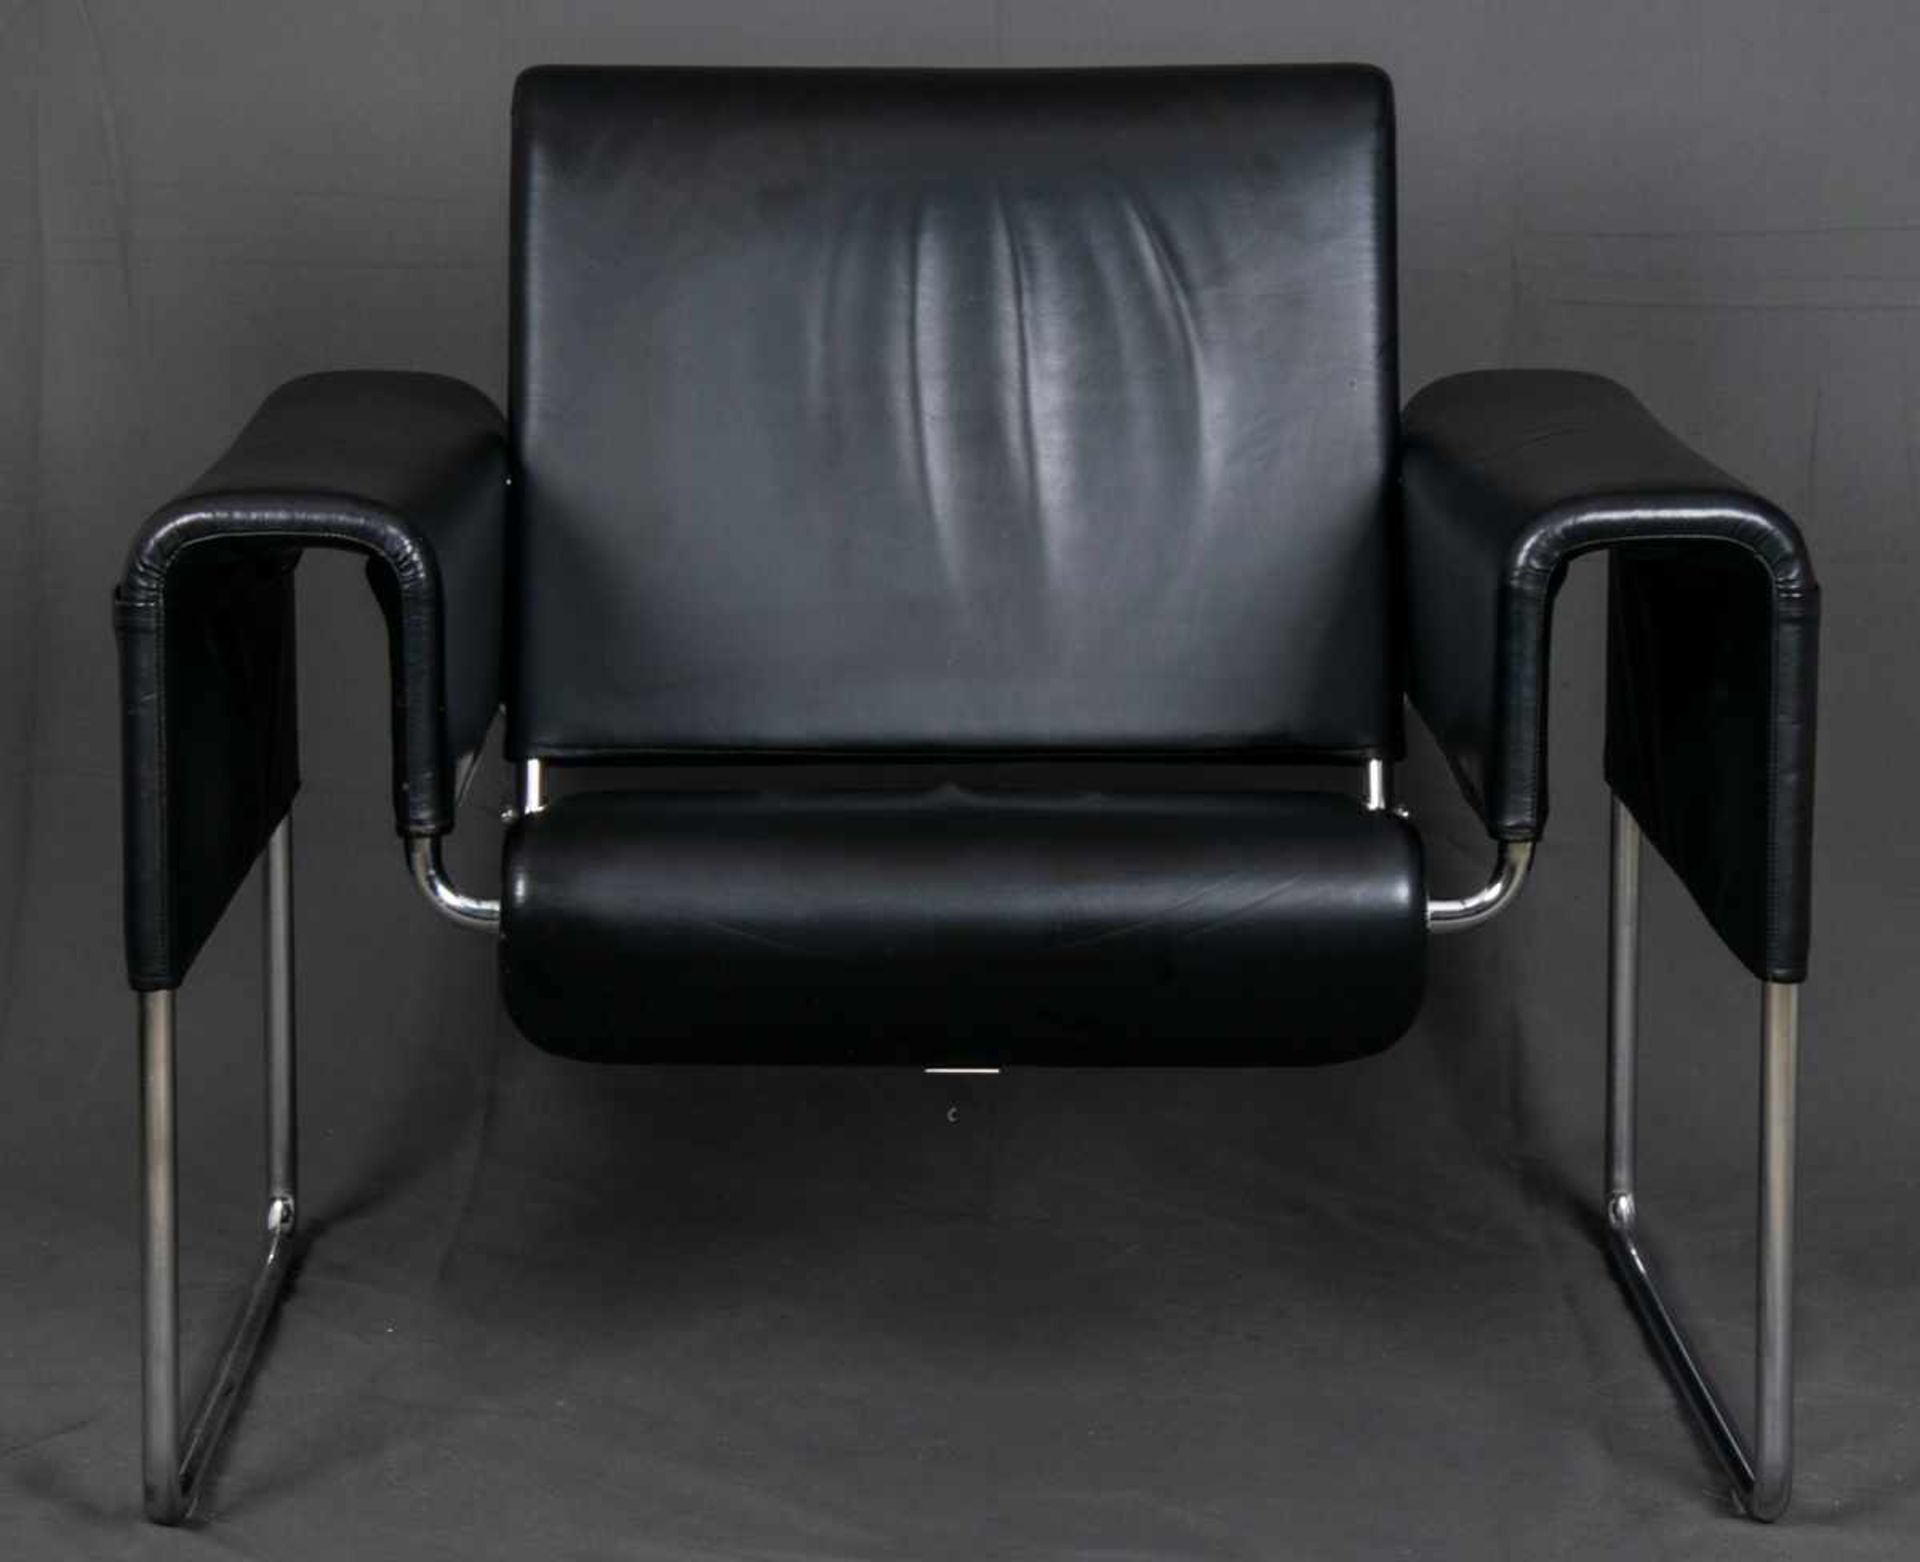 Lounge-Sessel "MOOD"-Design Studio 7.5, 2006. L & C ARNOLD, Stendal. Stahlrohrsessel mit schwarzer - Bild 2 aus 7